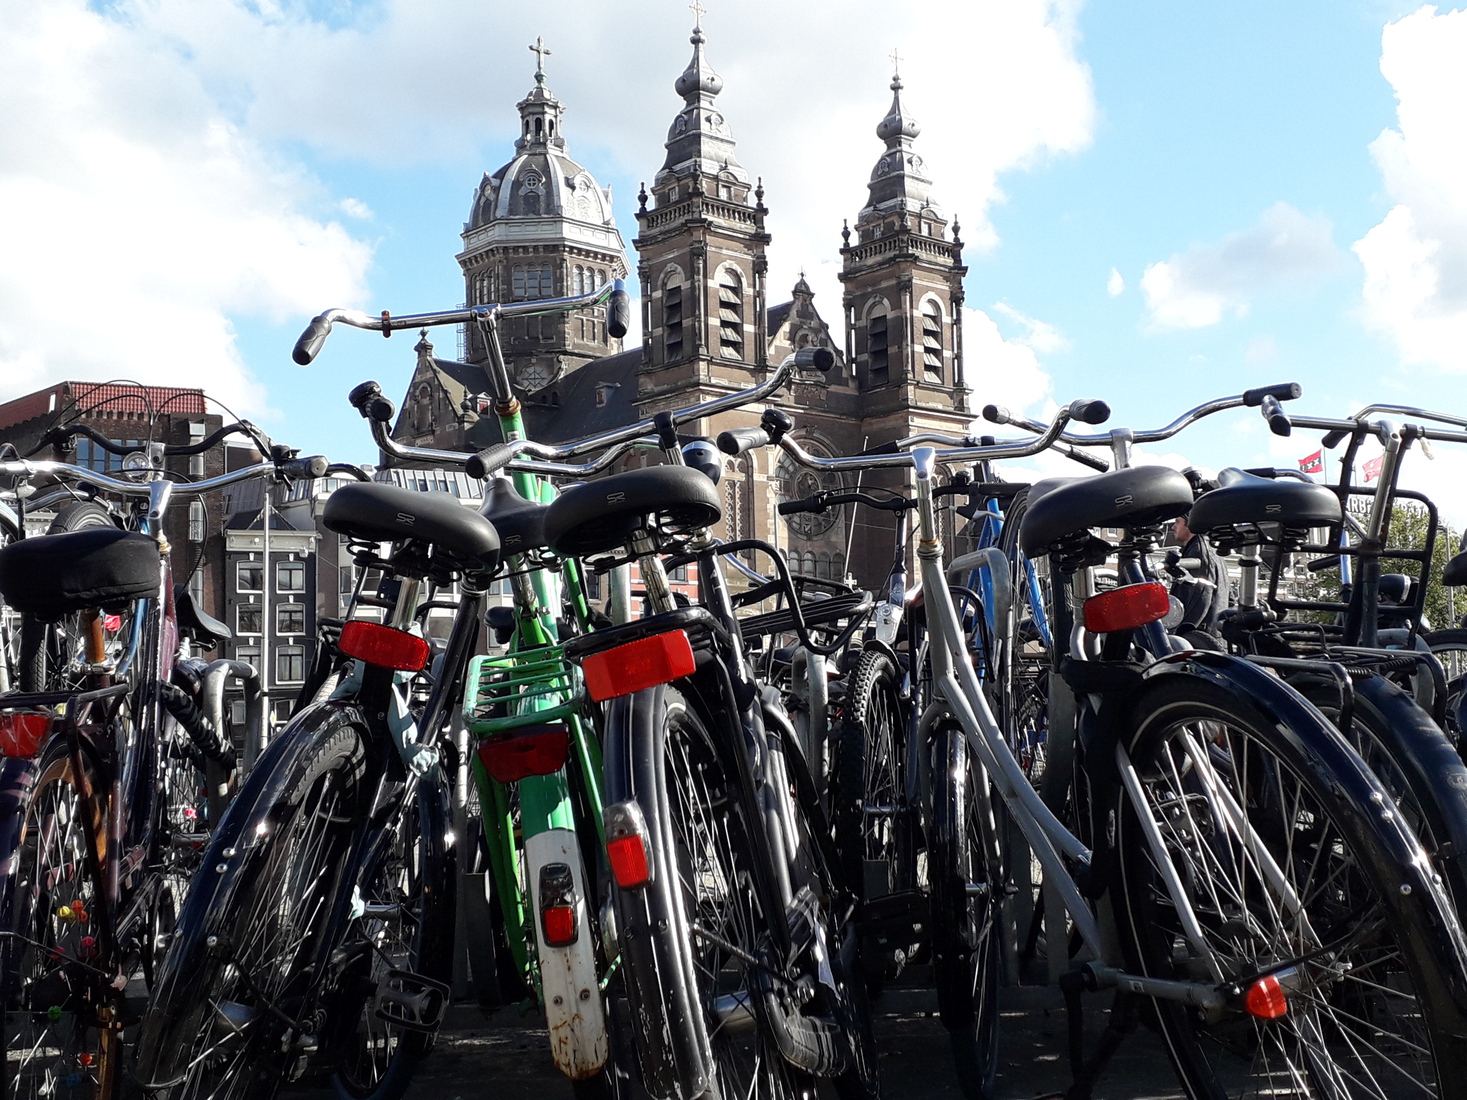 bikecity / amsterdam